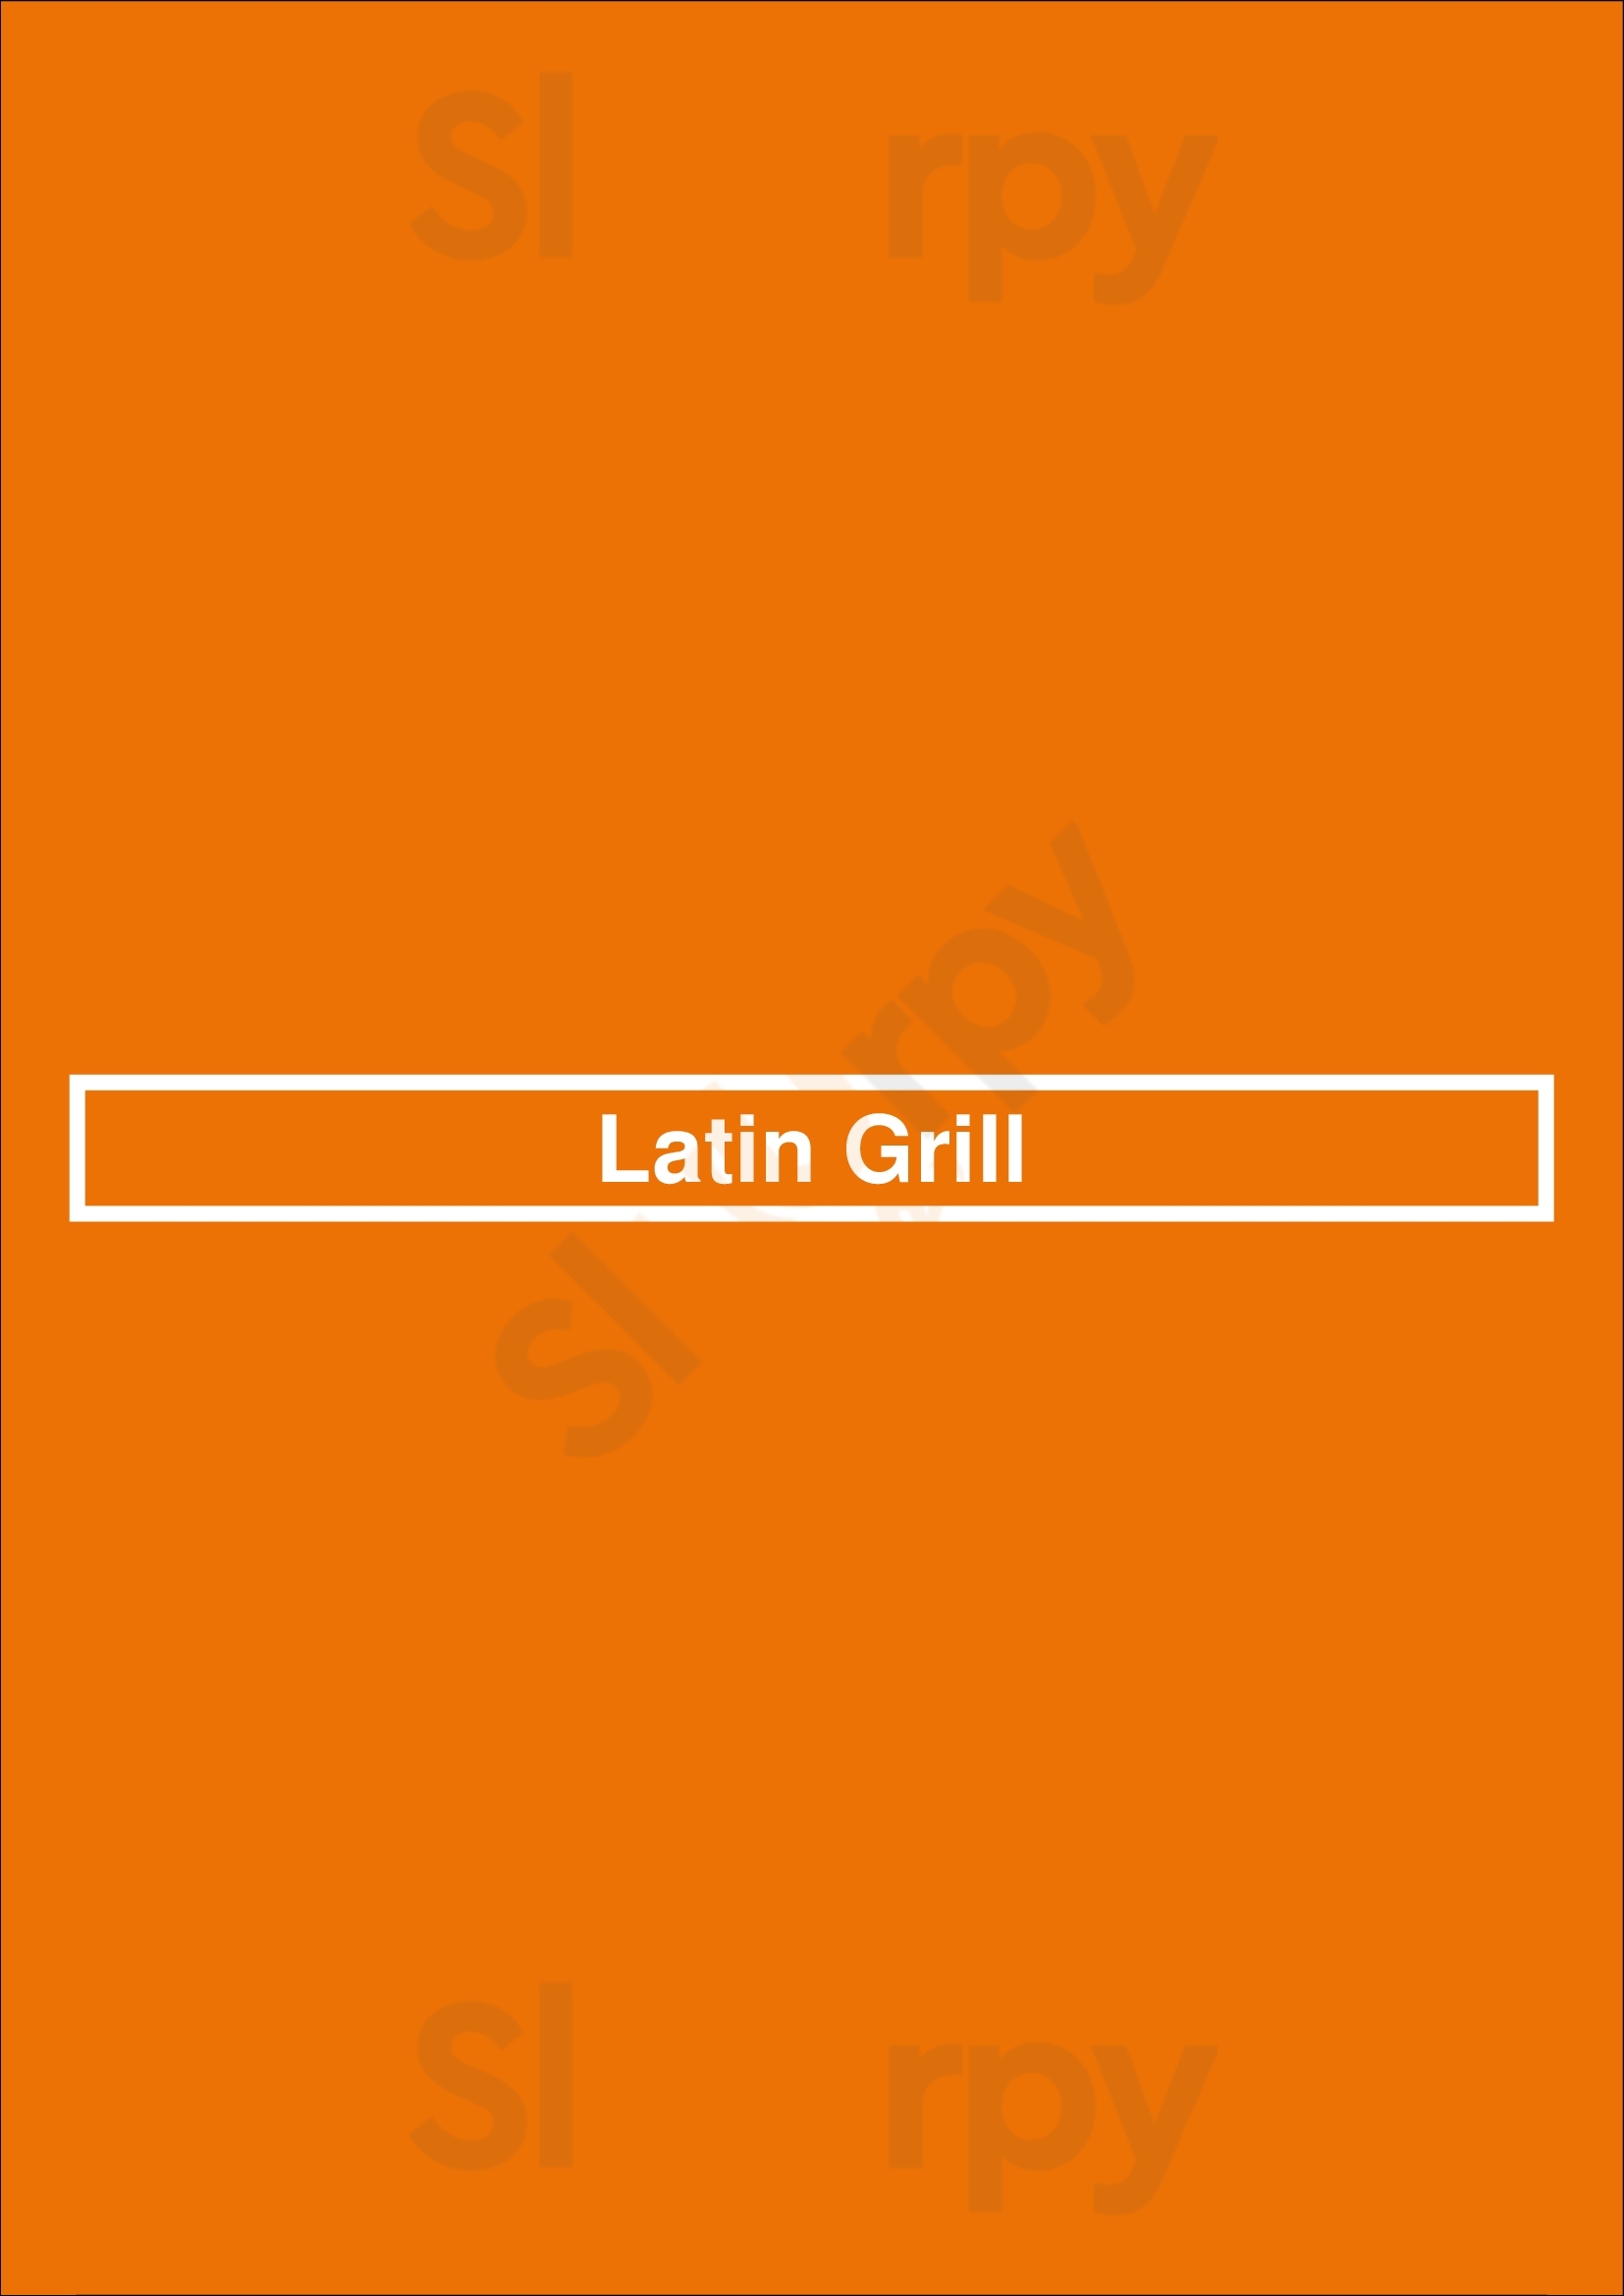 Latin Grill - Brandon Brandon Menu - 1